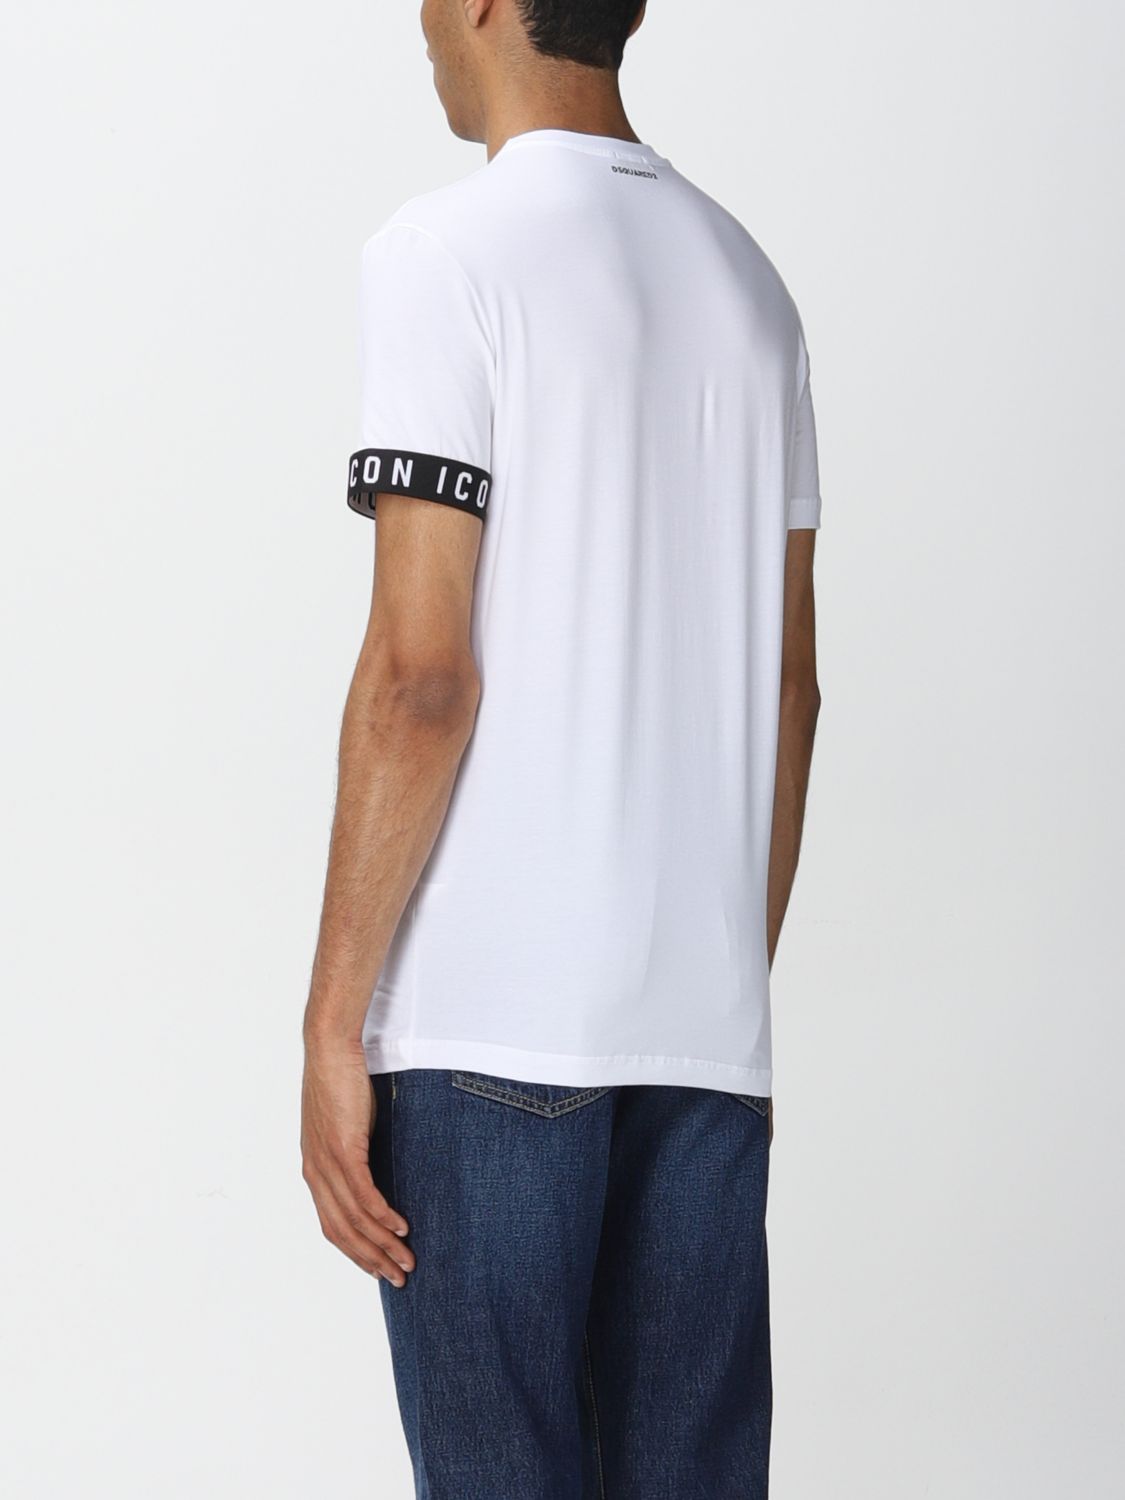 T-shirt intima basic con logo Giglio.com Uomo Abbigliamento Intimo Calze 